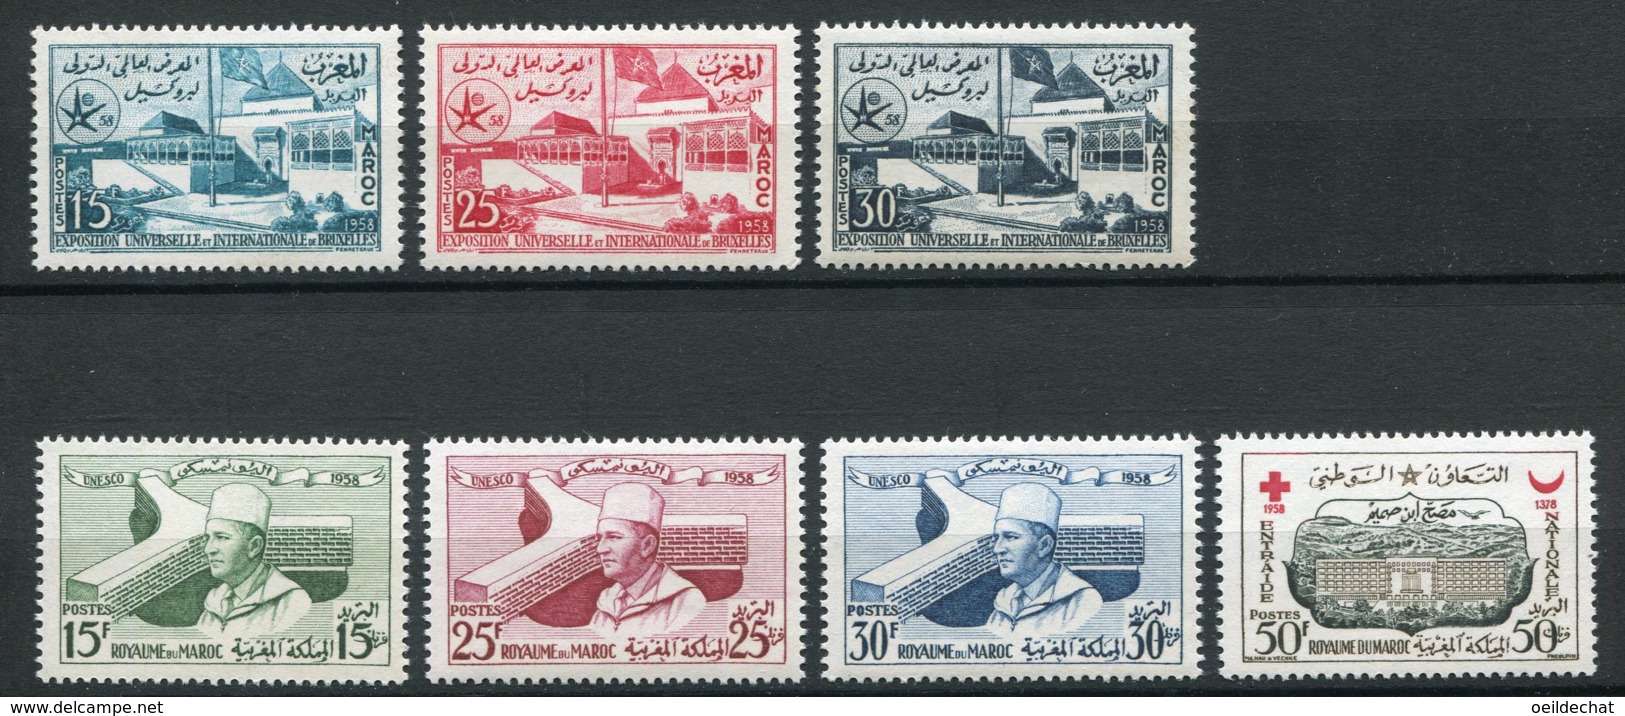 14774 MAROC N° 383/5, 386/8, 389 ** Exposition Universelle, UNESCO, Entraide Nationale   1958  TB/TTB - Marocco (1956-...)